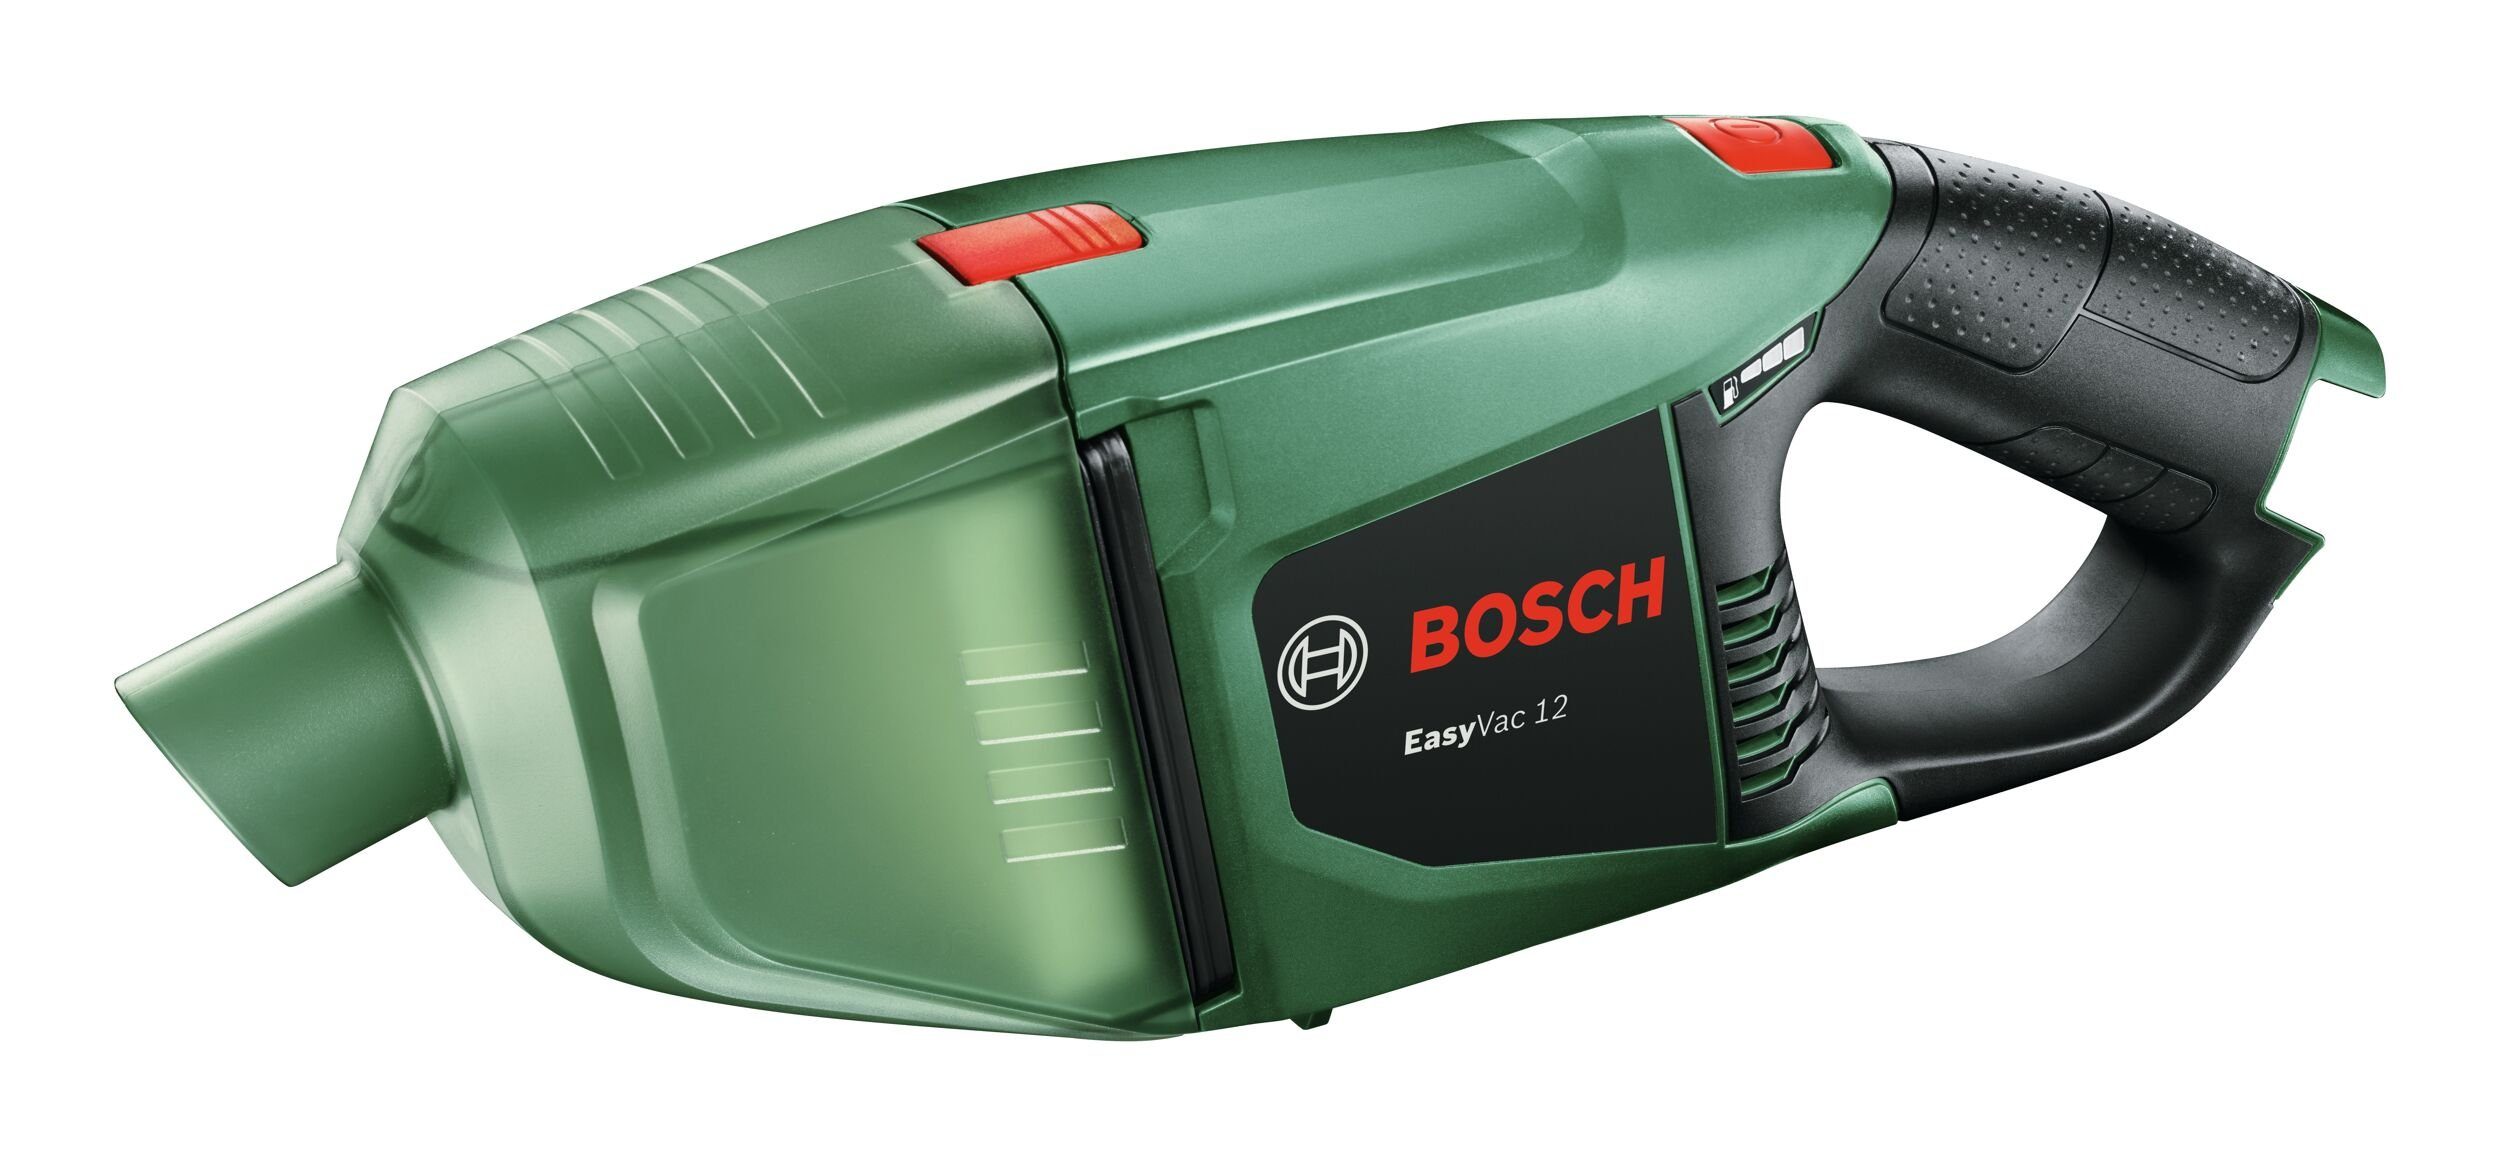 Bosch Home & Garden Akku-Handstaubsauger EasyVac 12, Trockensauger Ohne Akku - im Karton